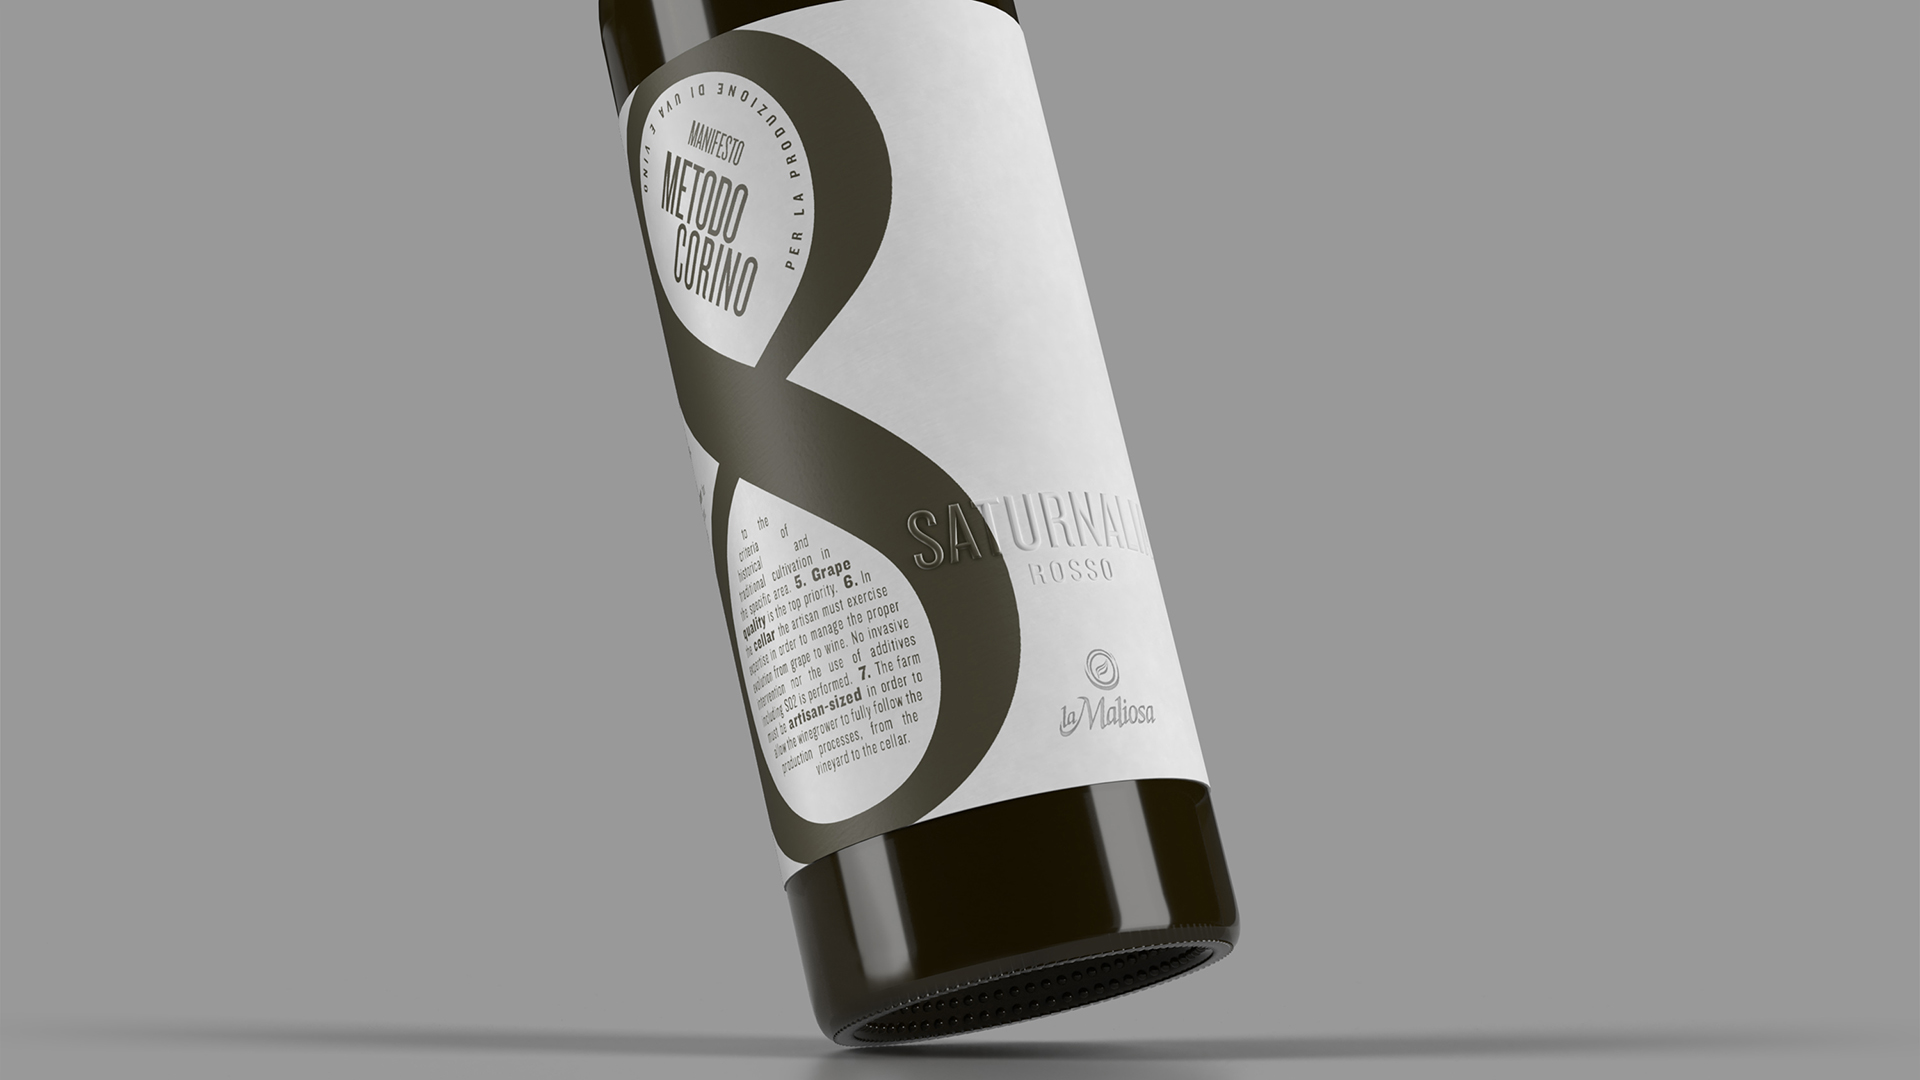 RAF-Saturnalia-wine-bottle.jpg